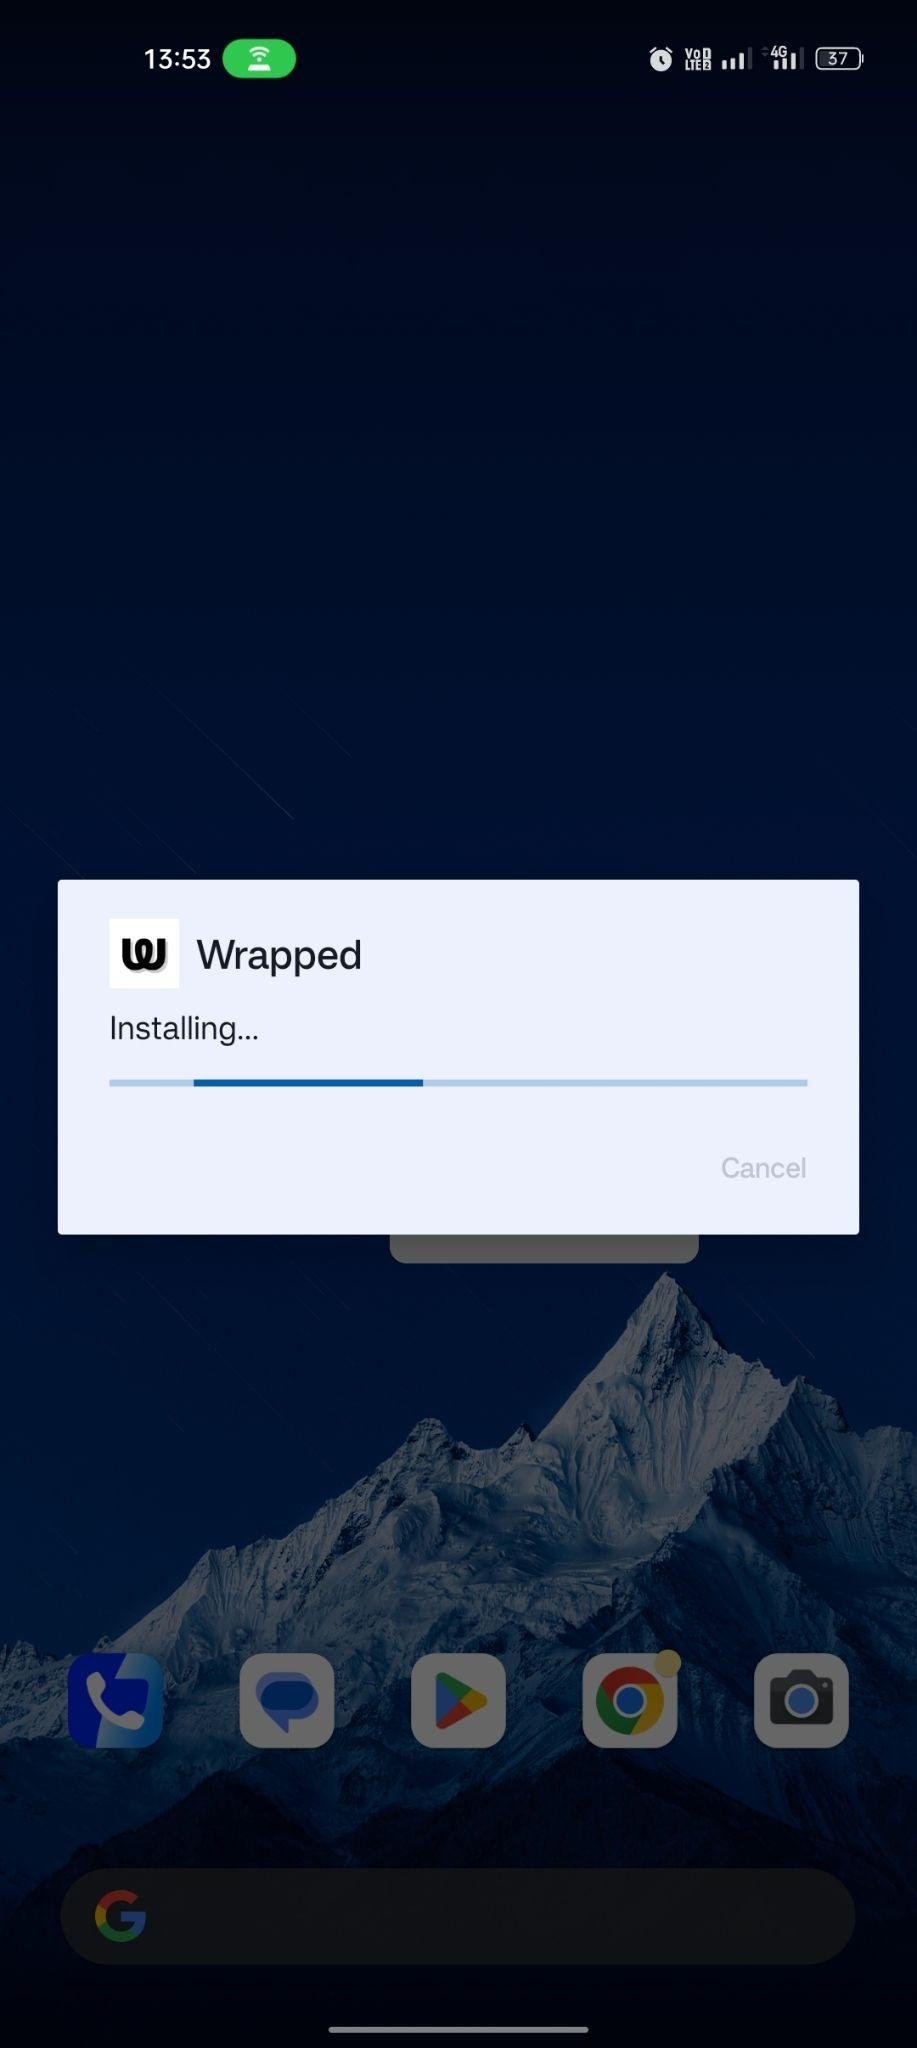 IG Wrapped apk installing